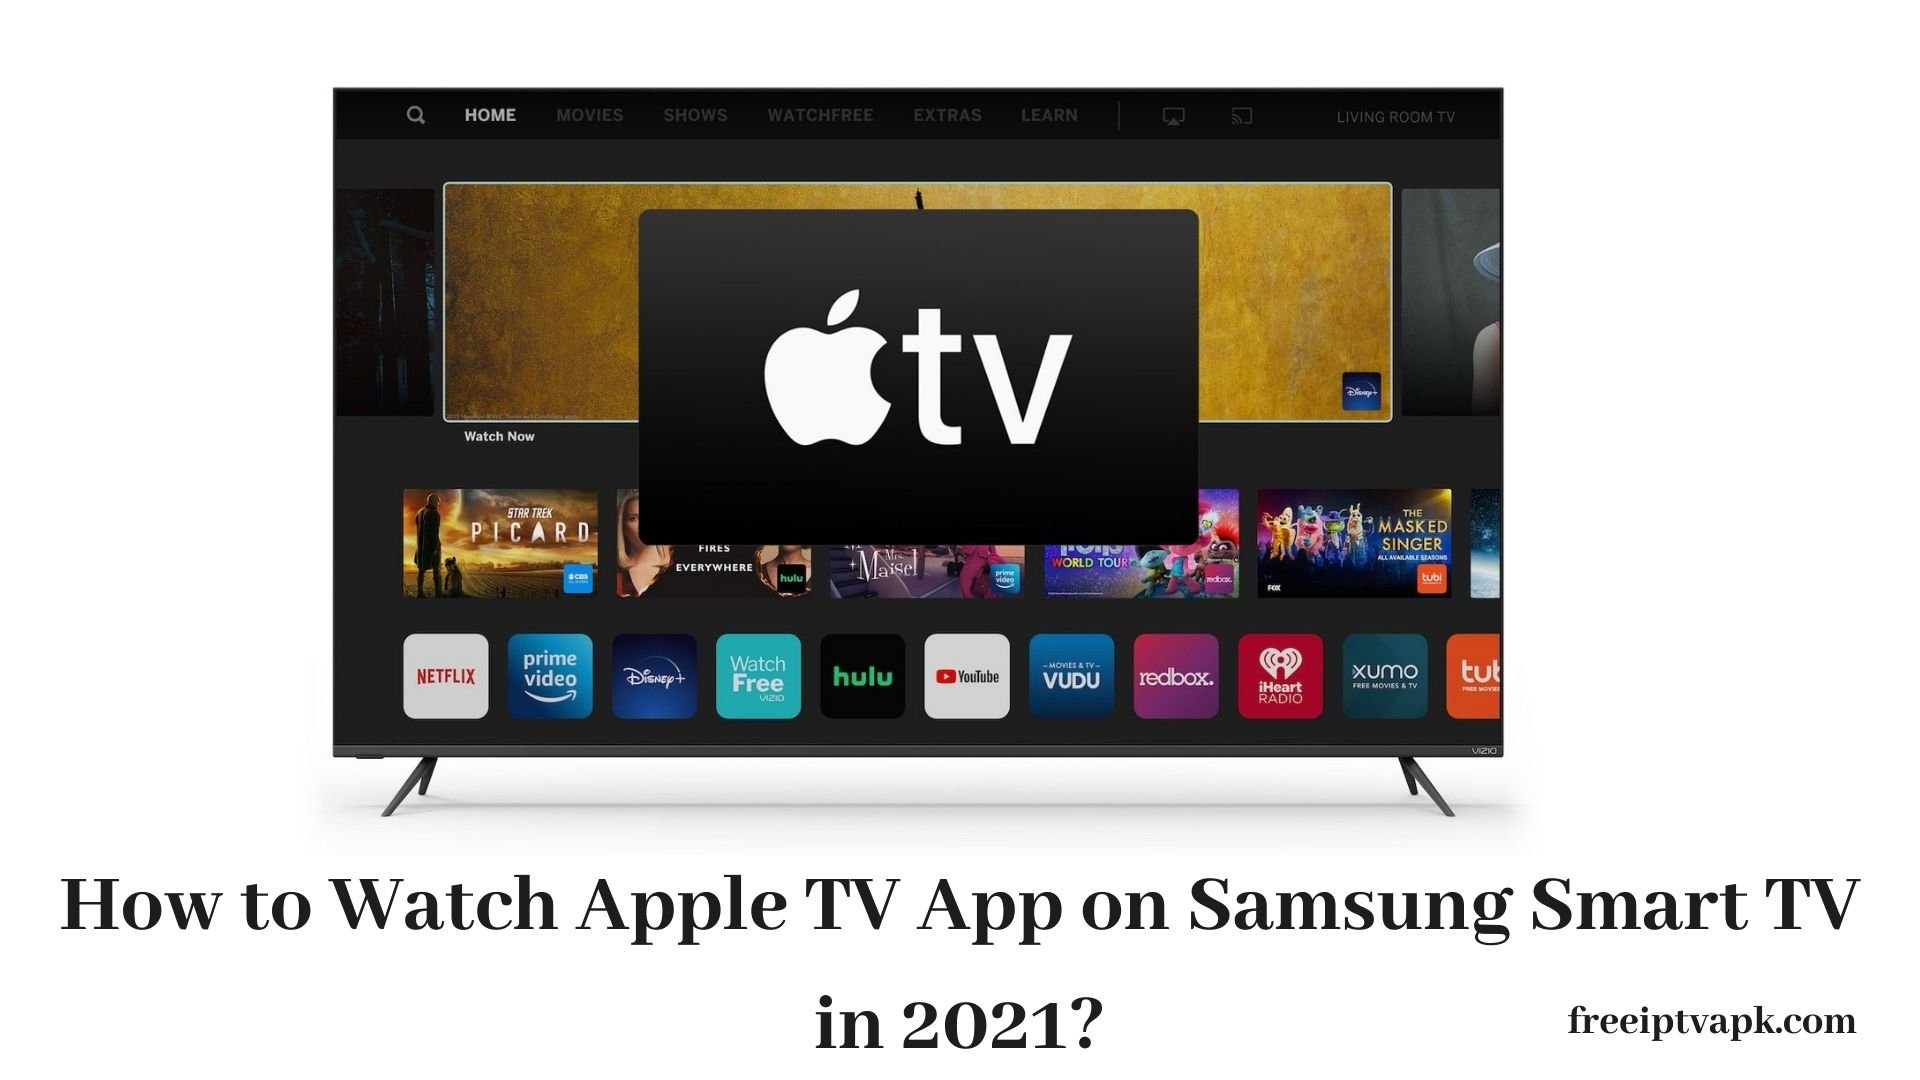 How to Watch Apple TV App on Samsung Smart TV in 2021?